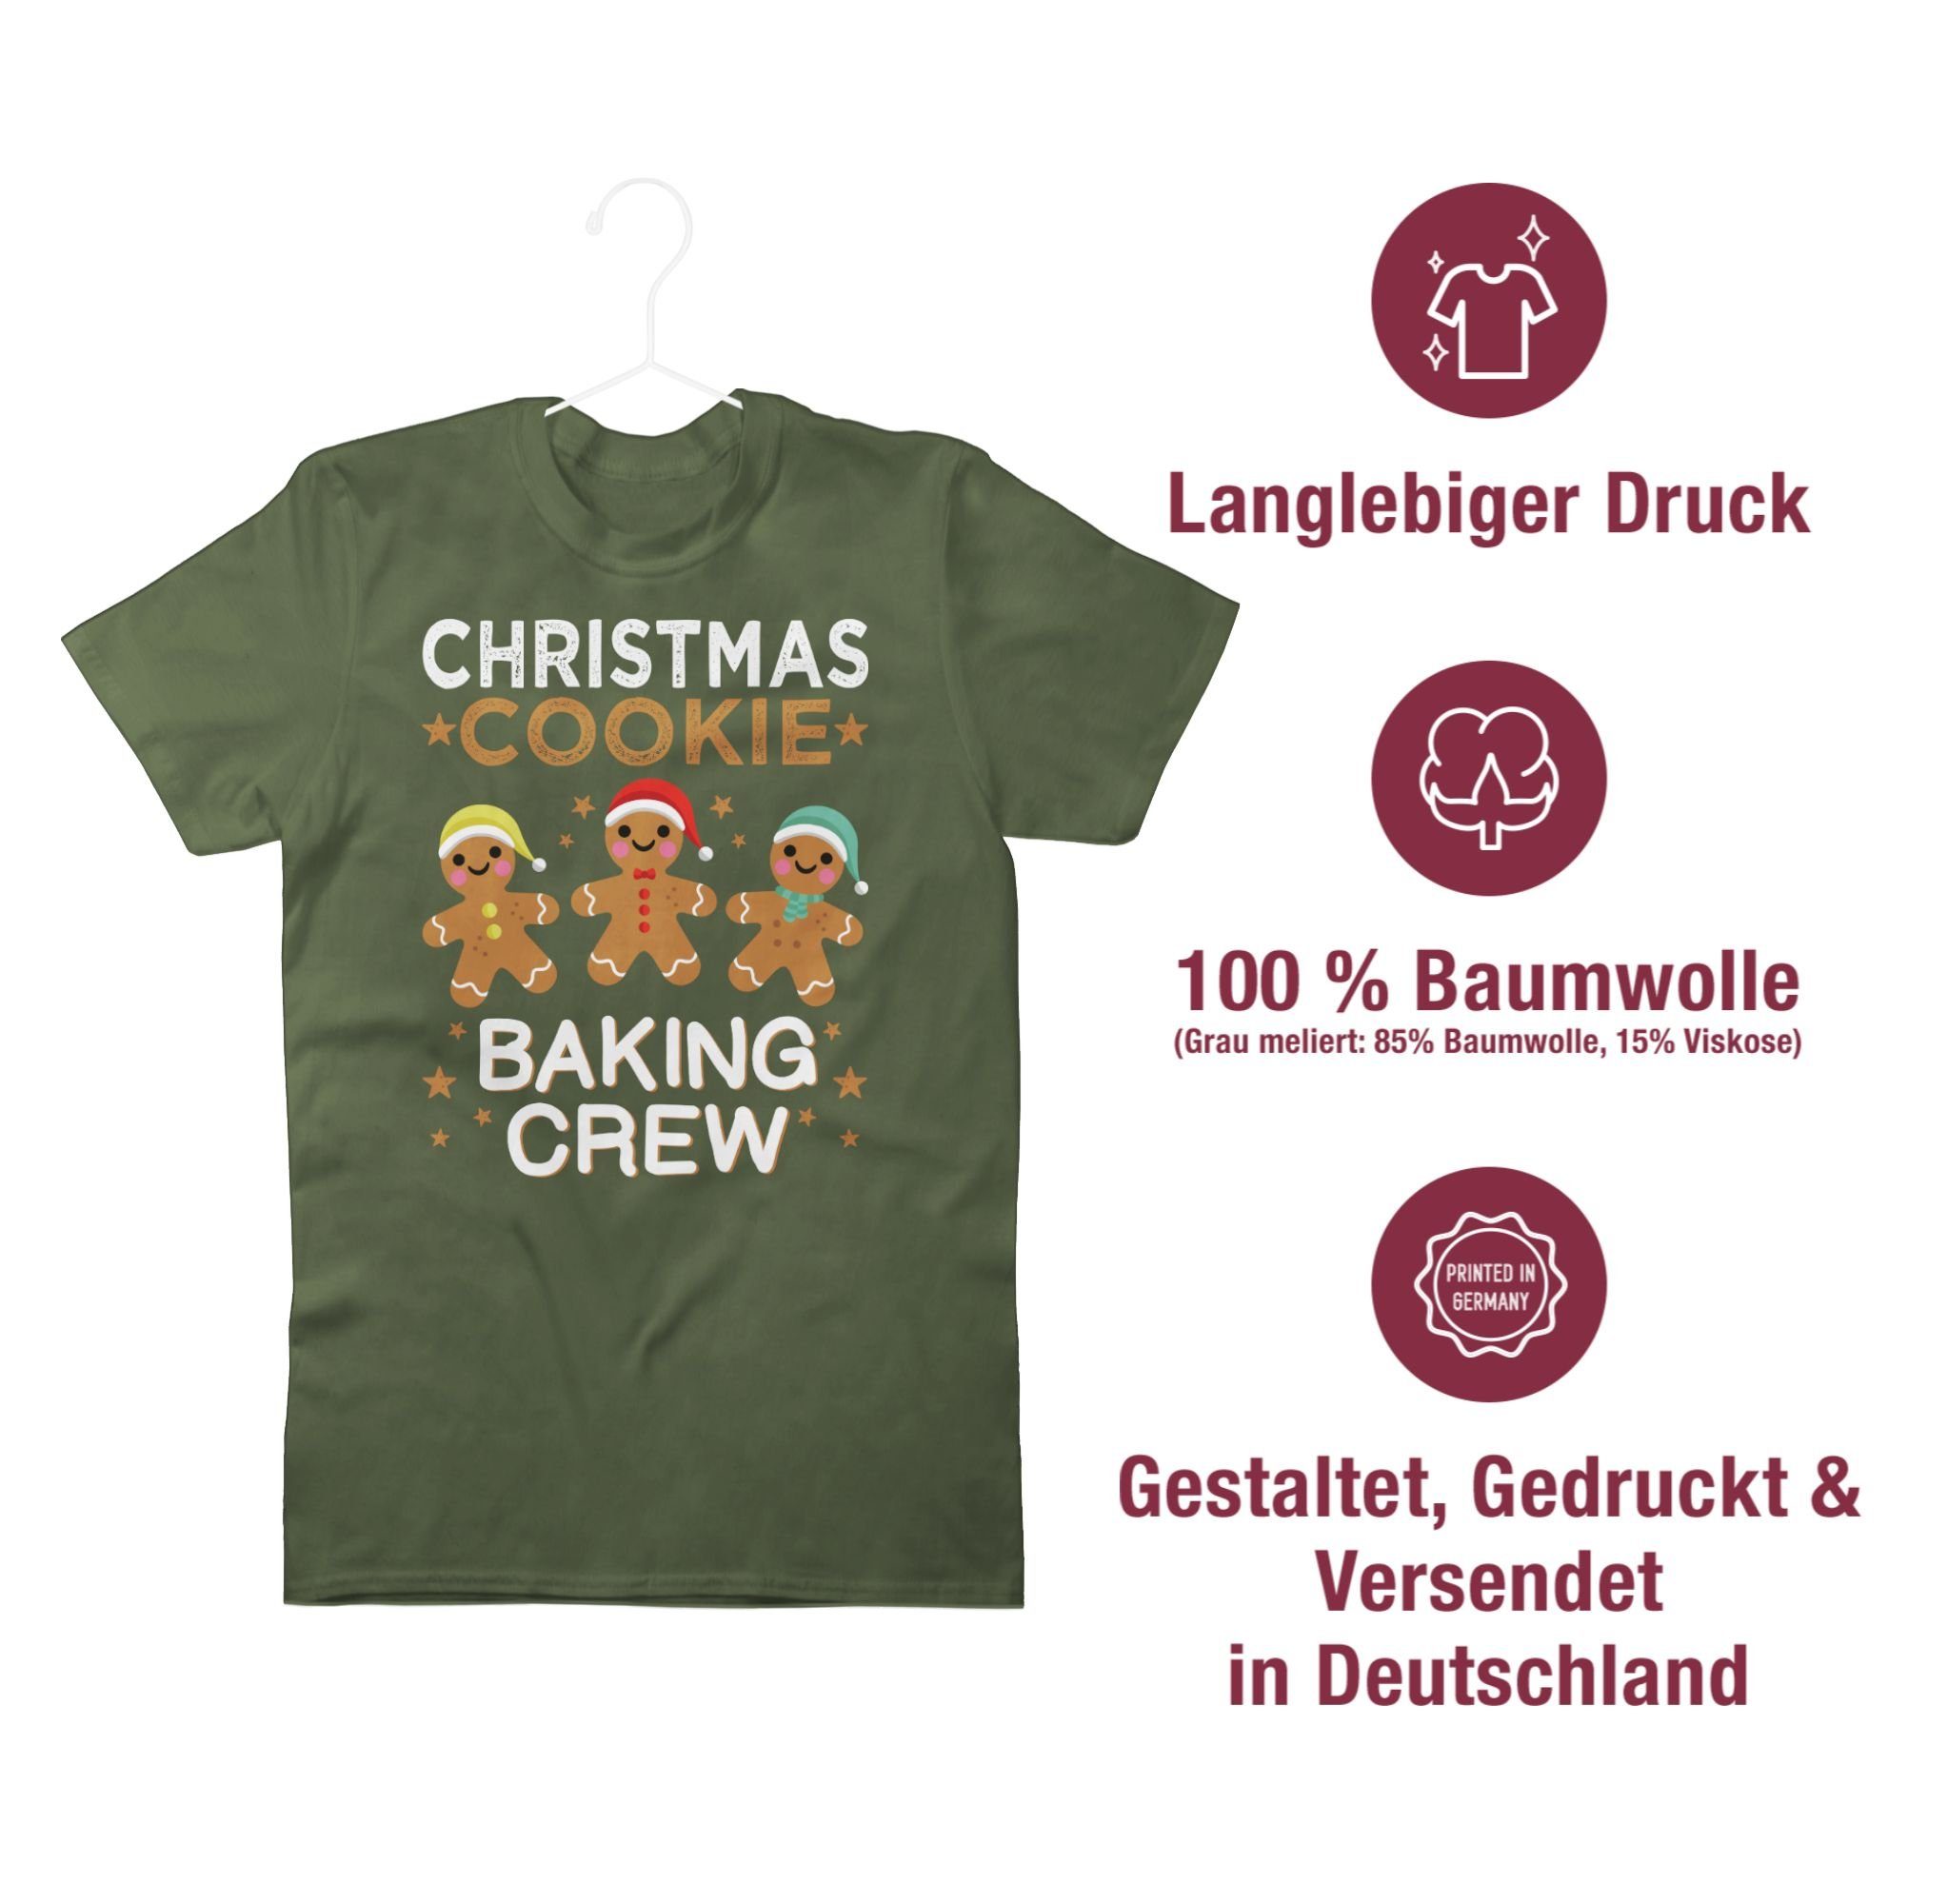 Shirtracer T-Shirt Christmas 2 Kleidung Weihachten Army Crew Lebkuchenmännchen Cookie Grün Baking